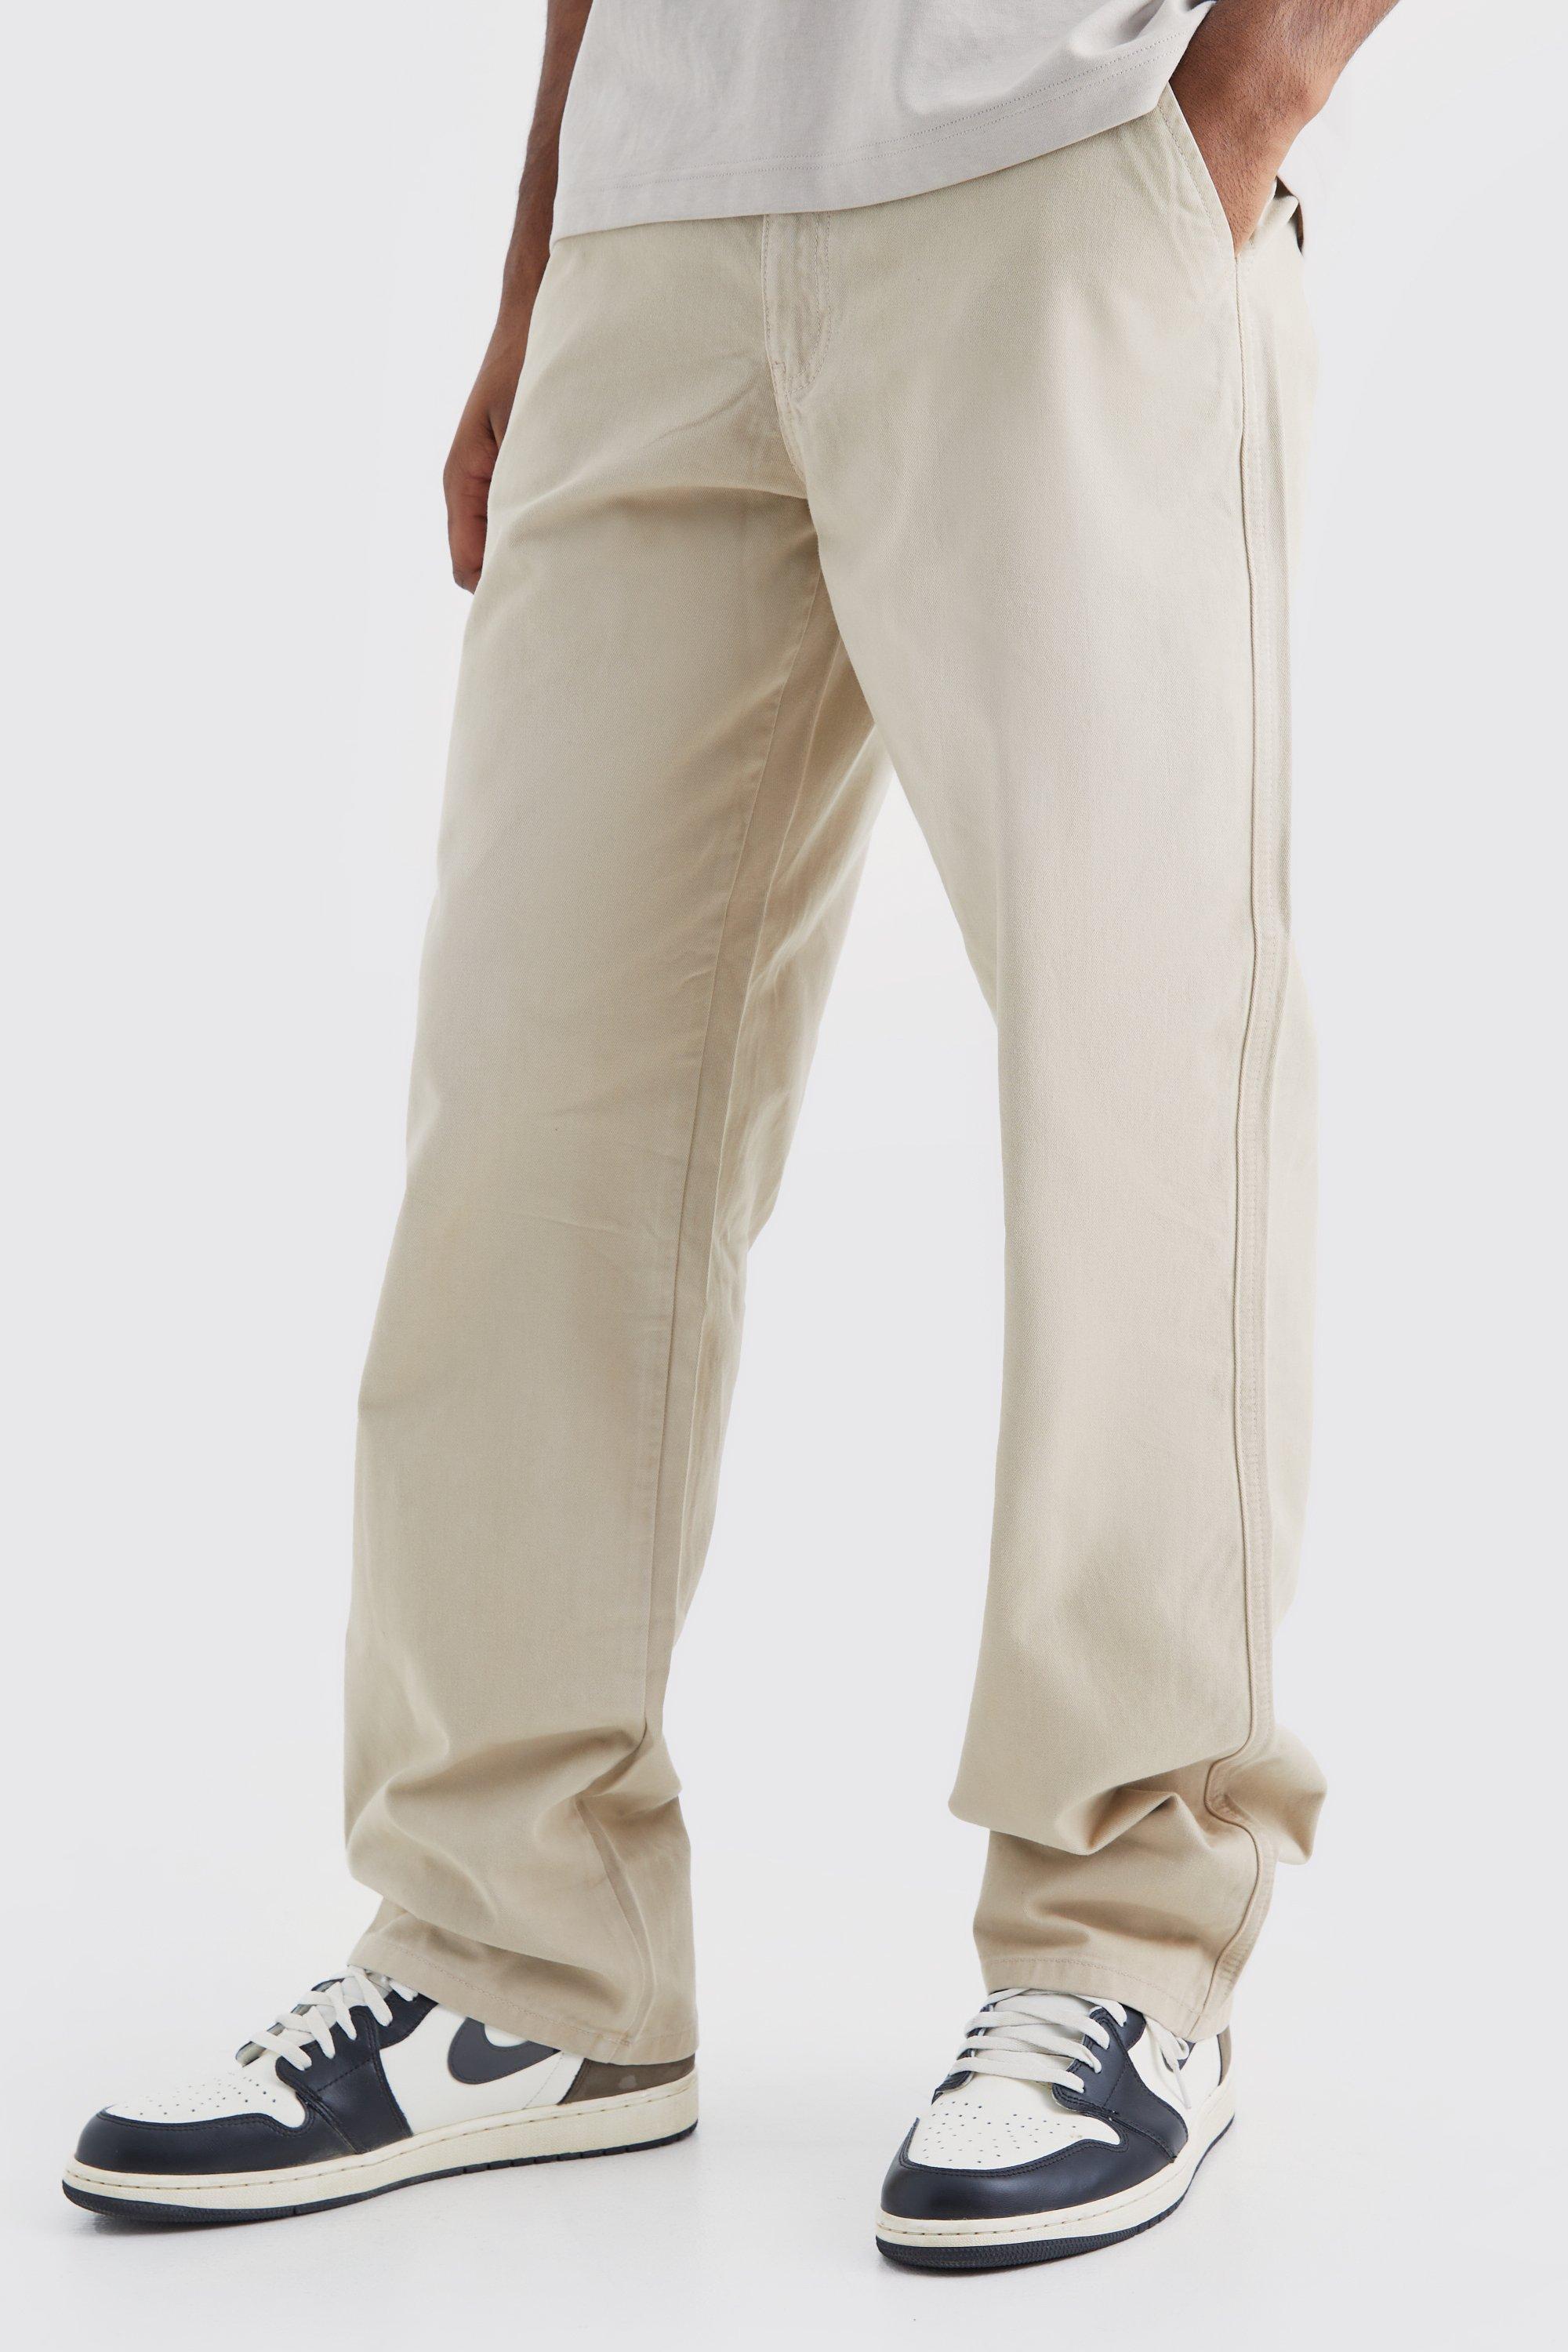 tall - pantalon chino large homme - pierre - 30, pierre